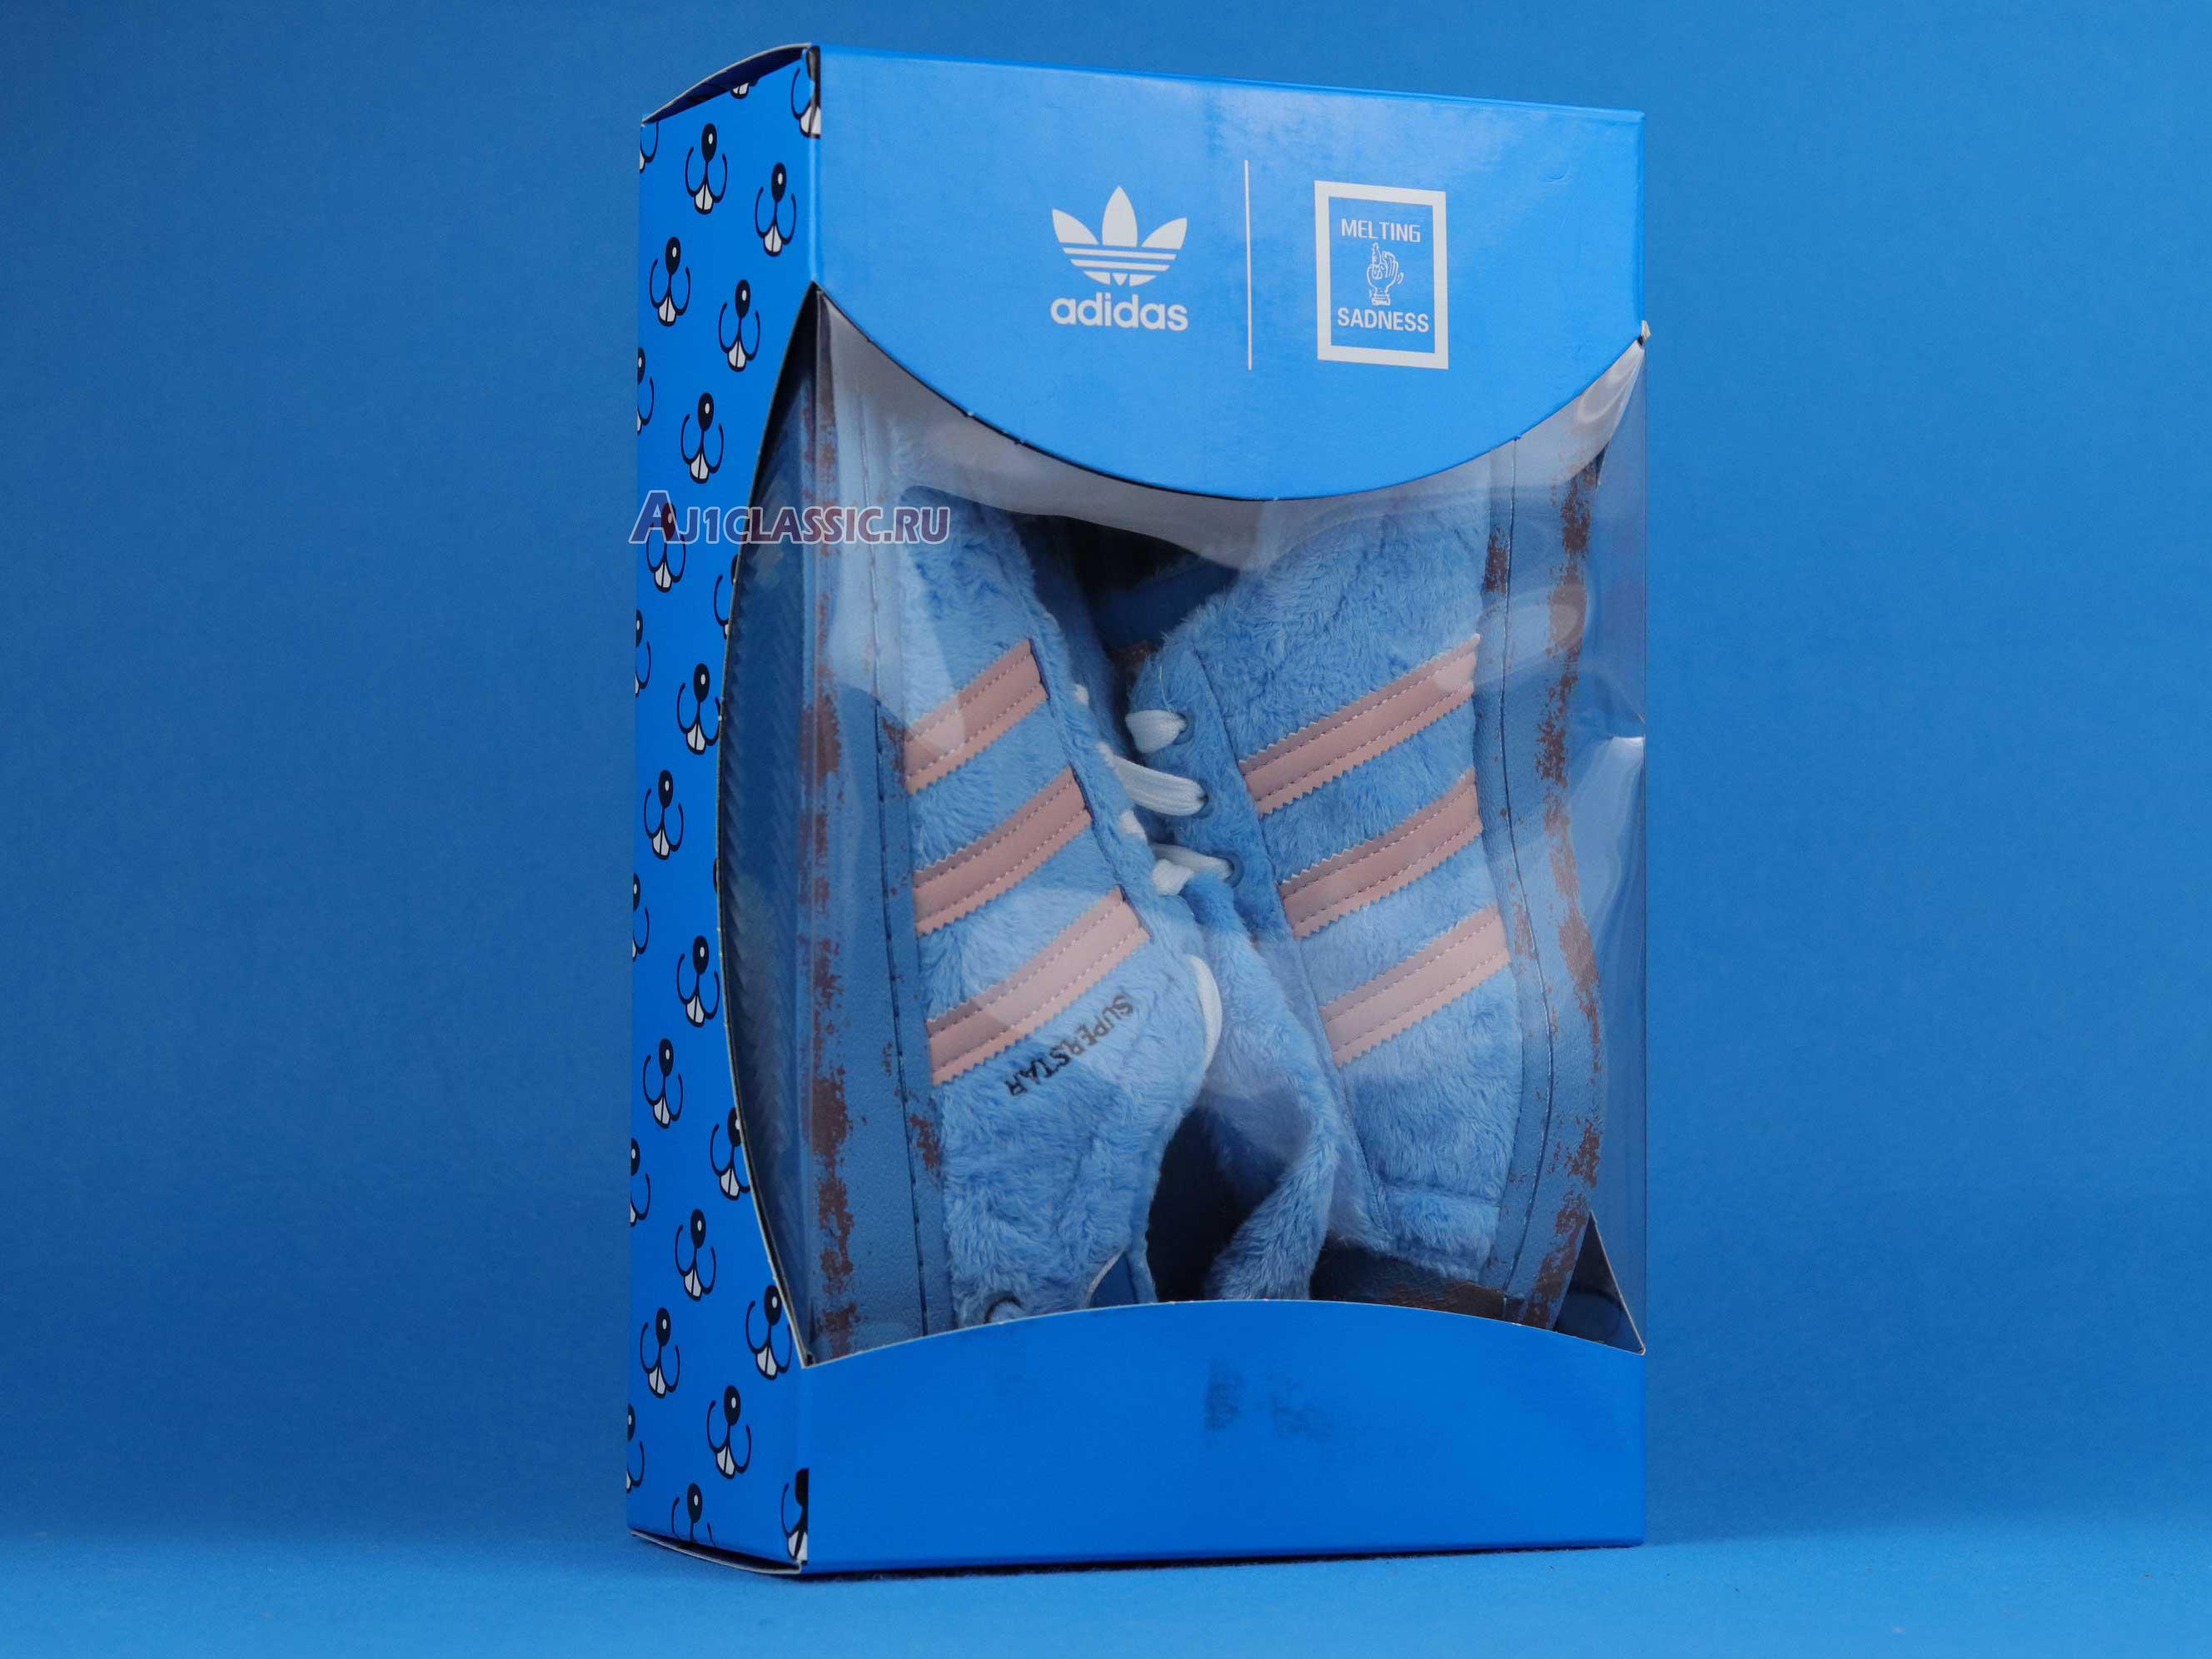 Melting Sadness x Adidas Superstar Bunny FZ5253 Joy Blue/Glow Pink/Craft Blue Sneakers